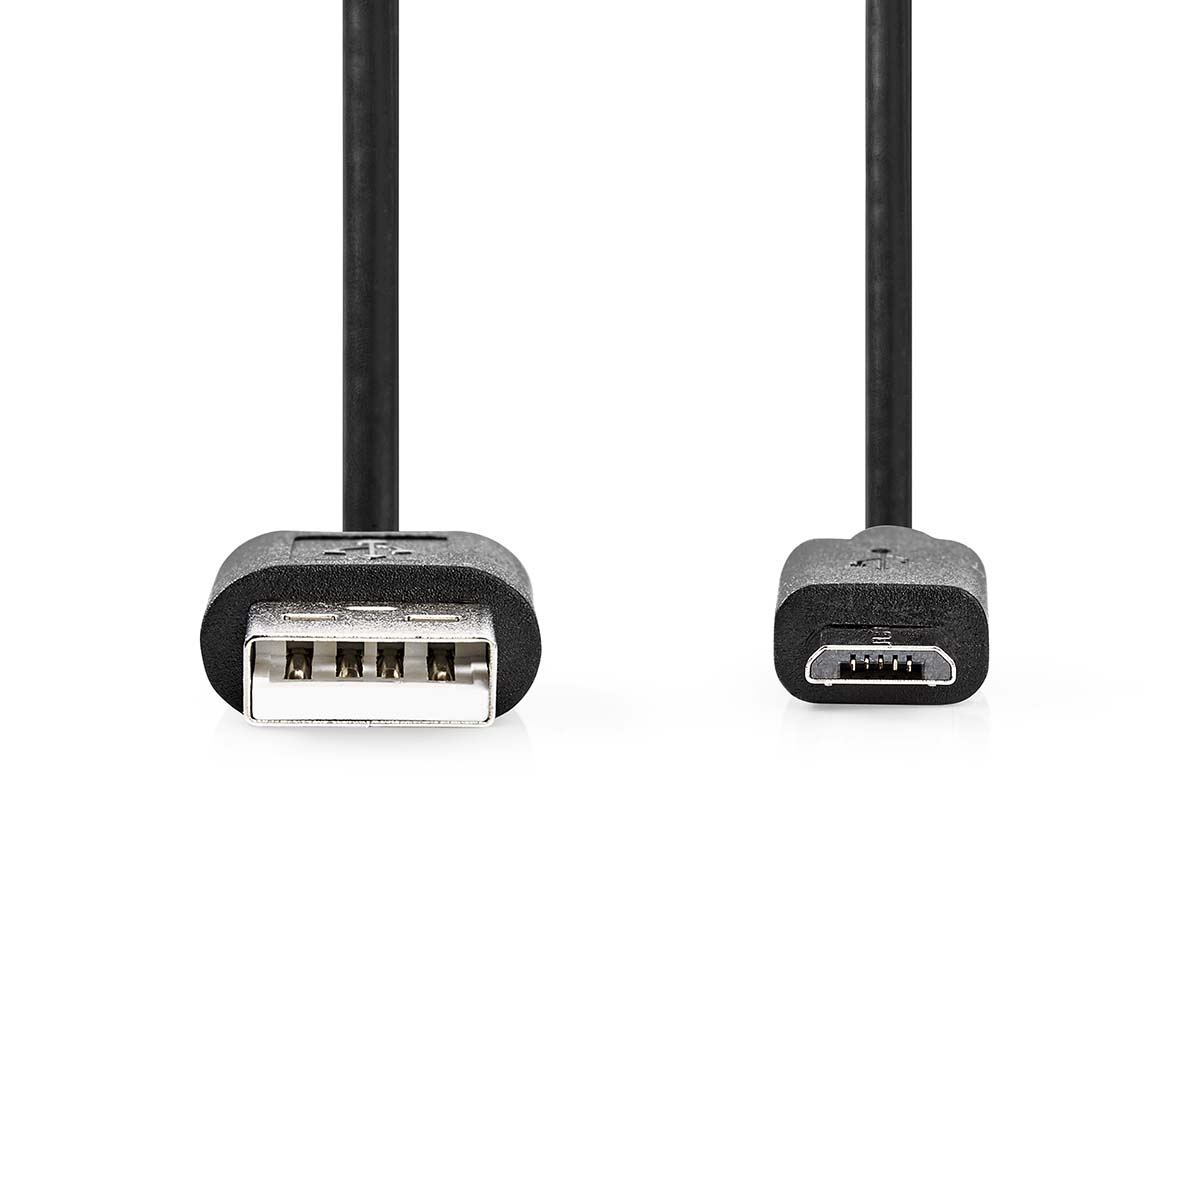 CCGL60501BK10, NEDIS USB-Kabel